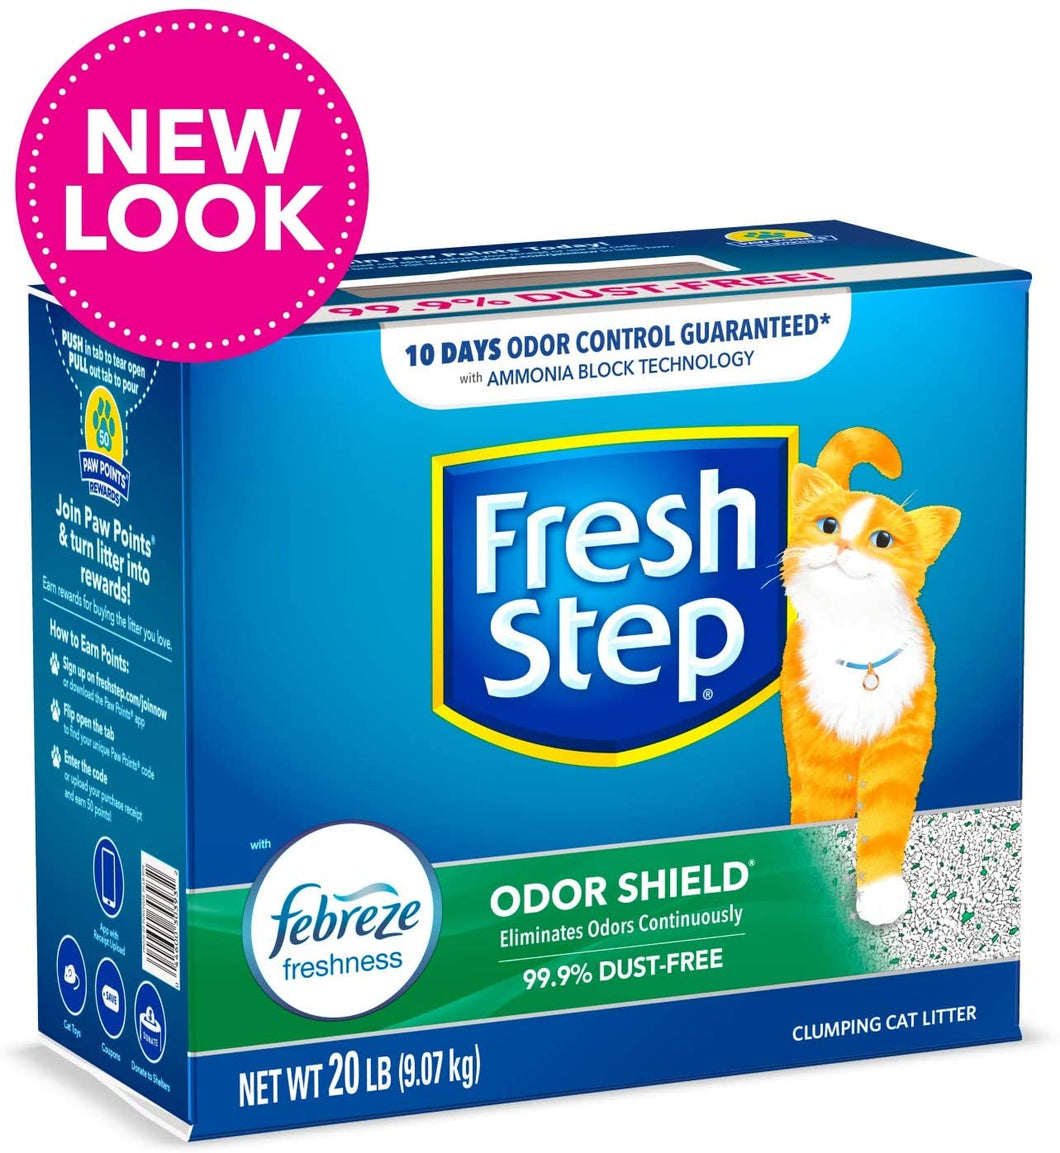 Arena Fresh Step Odor Shield 9.07 KG (20 LB)